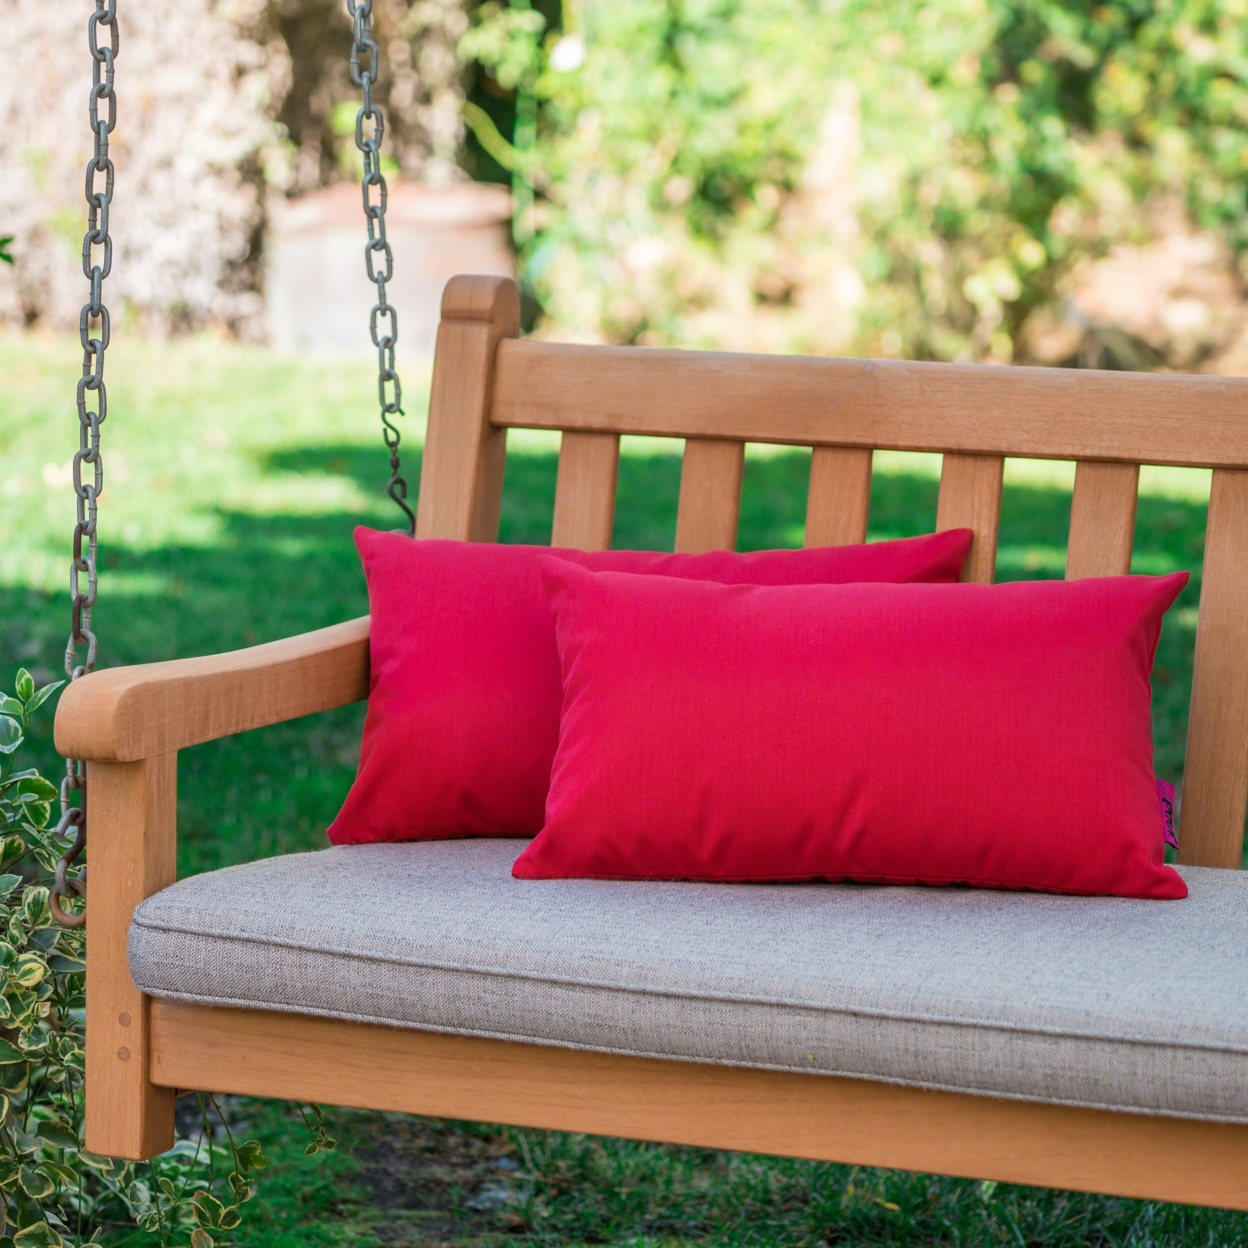 Coronado Outdoor Red Water Resistant Rectangular Throw Pillow - Gray, Single